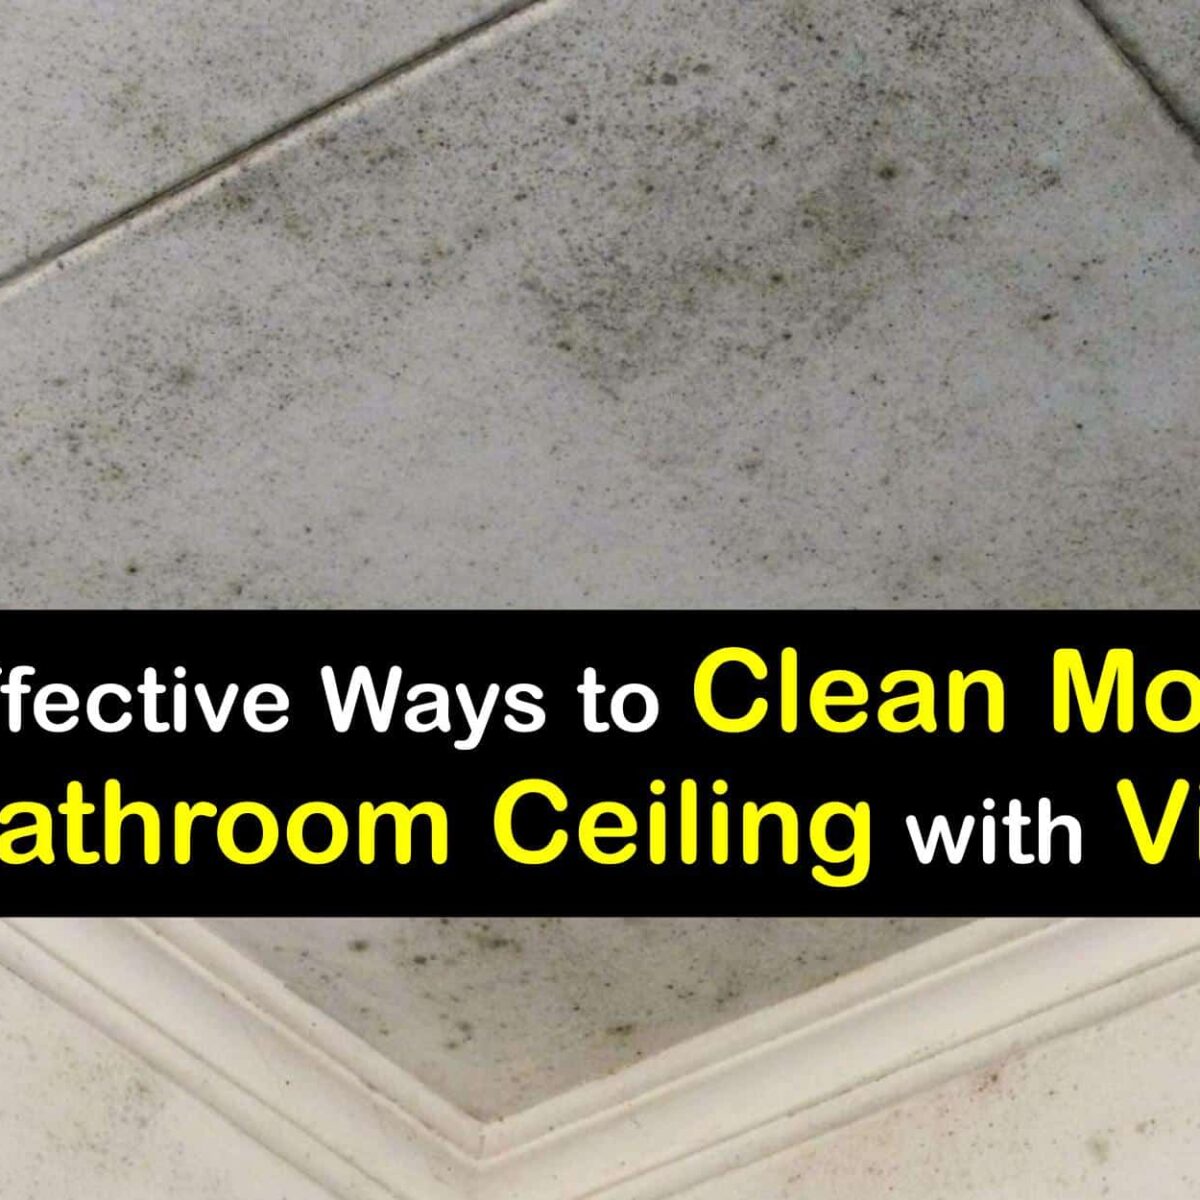 Bathroom Ceiling Cleaning Getting